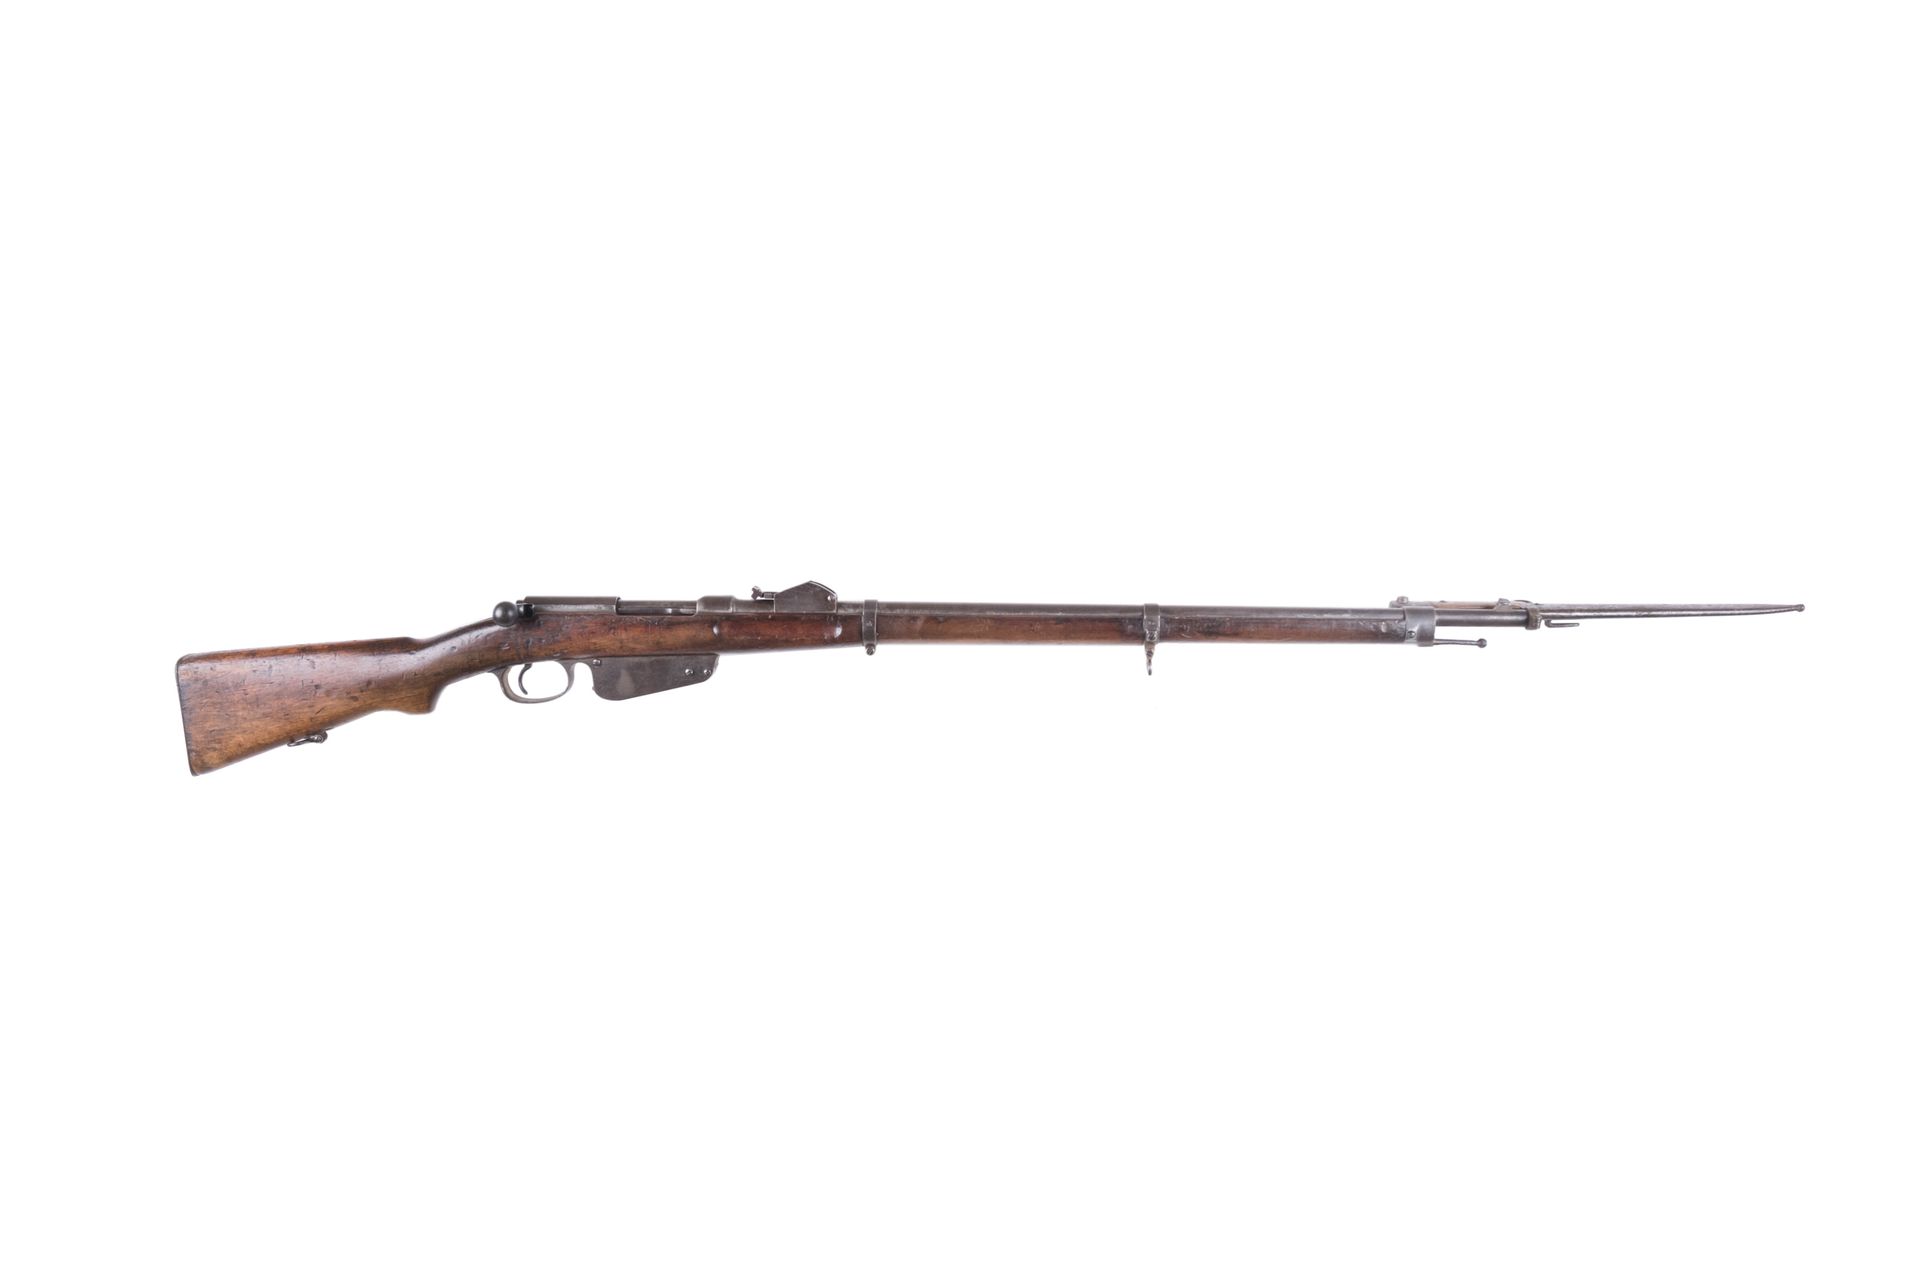 Null 奥地利曼利夏步枪1888年。

圆形枪管，有青蛙，印有雷鸣般的 "OEWG"。铁制配件。胡桃木枪托，有序列号。

背板上印有 "55 R 621"。
&hellip;